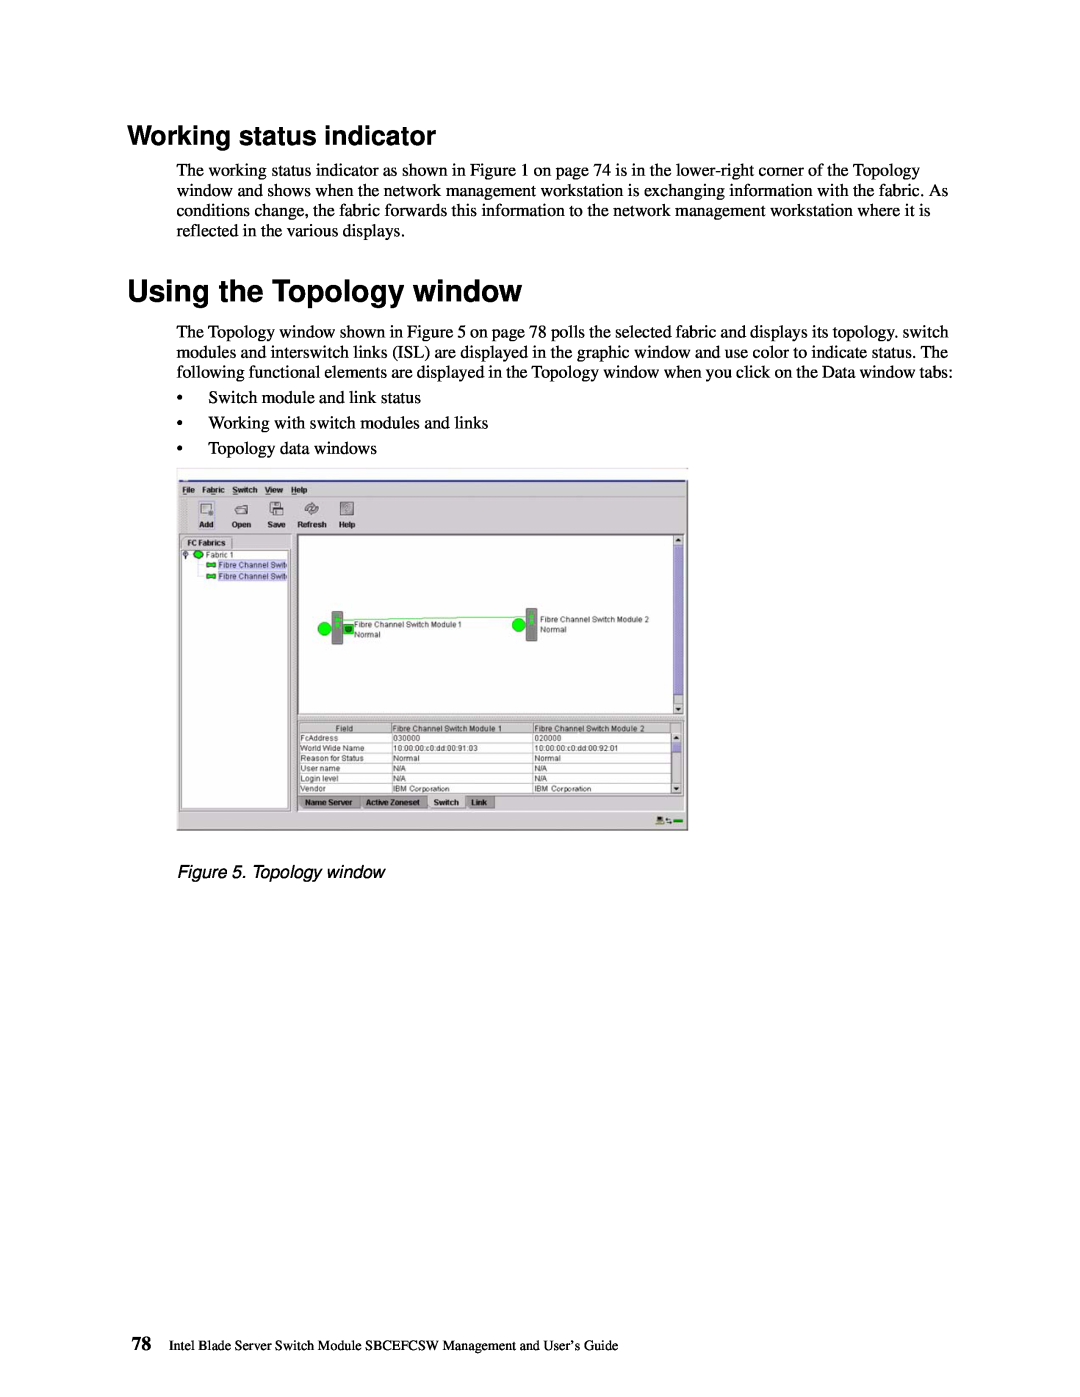 Intel SBCEFCSW manual Using the Topology window, Working status indicator 